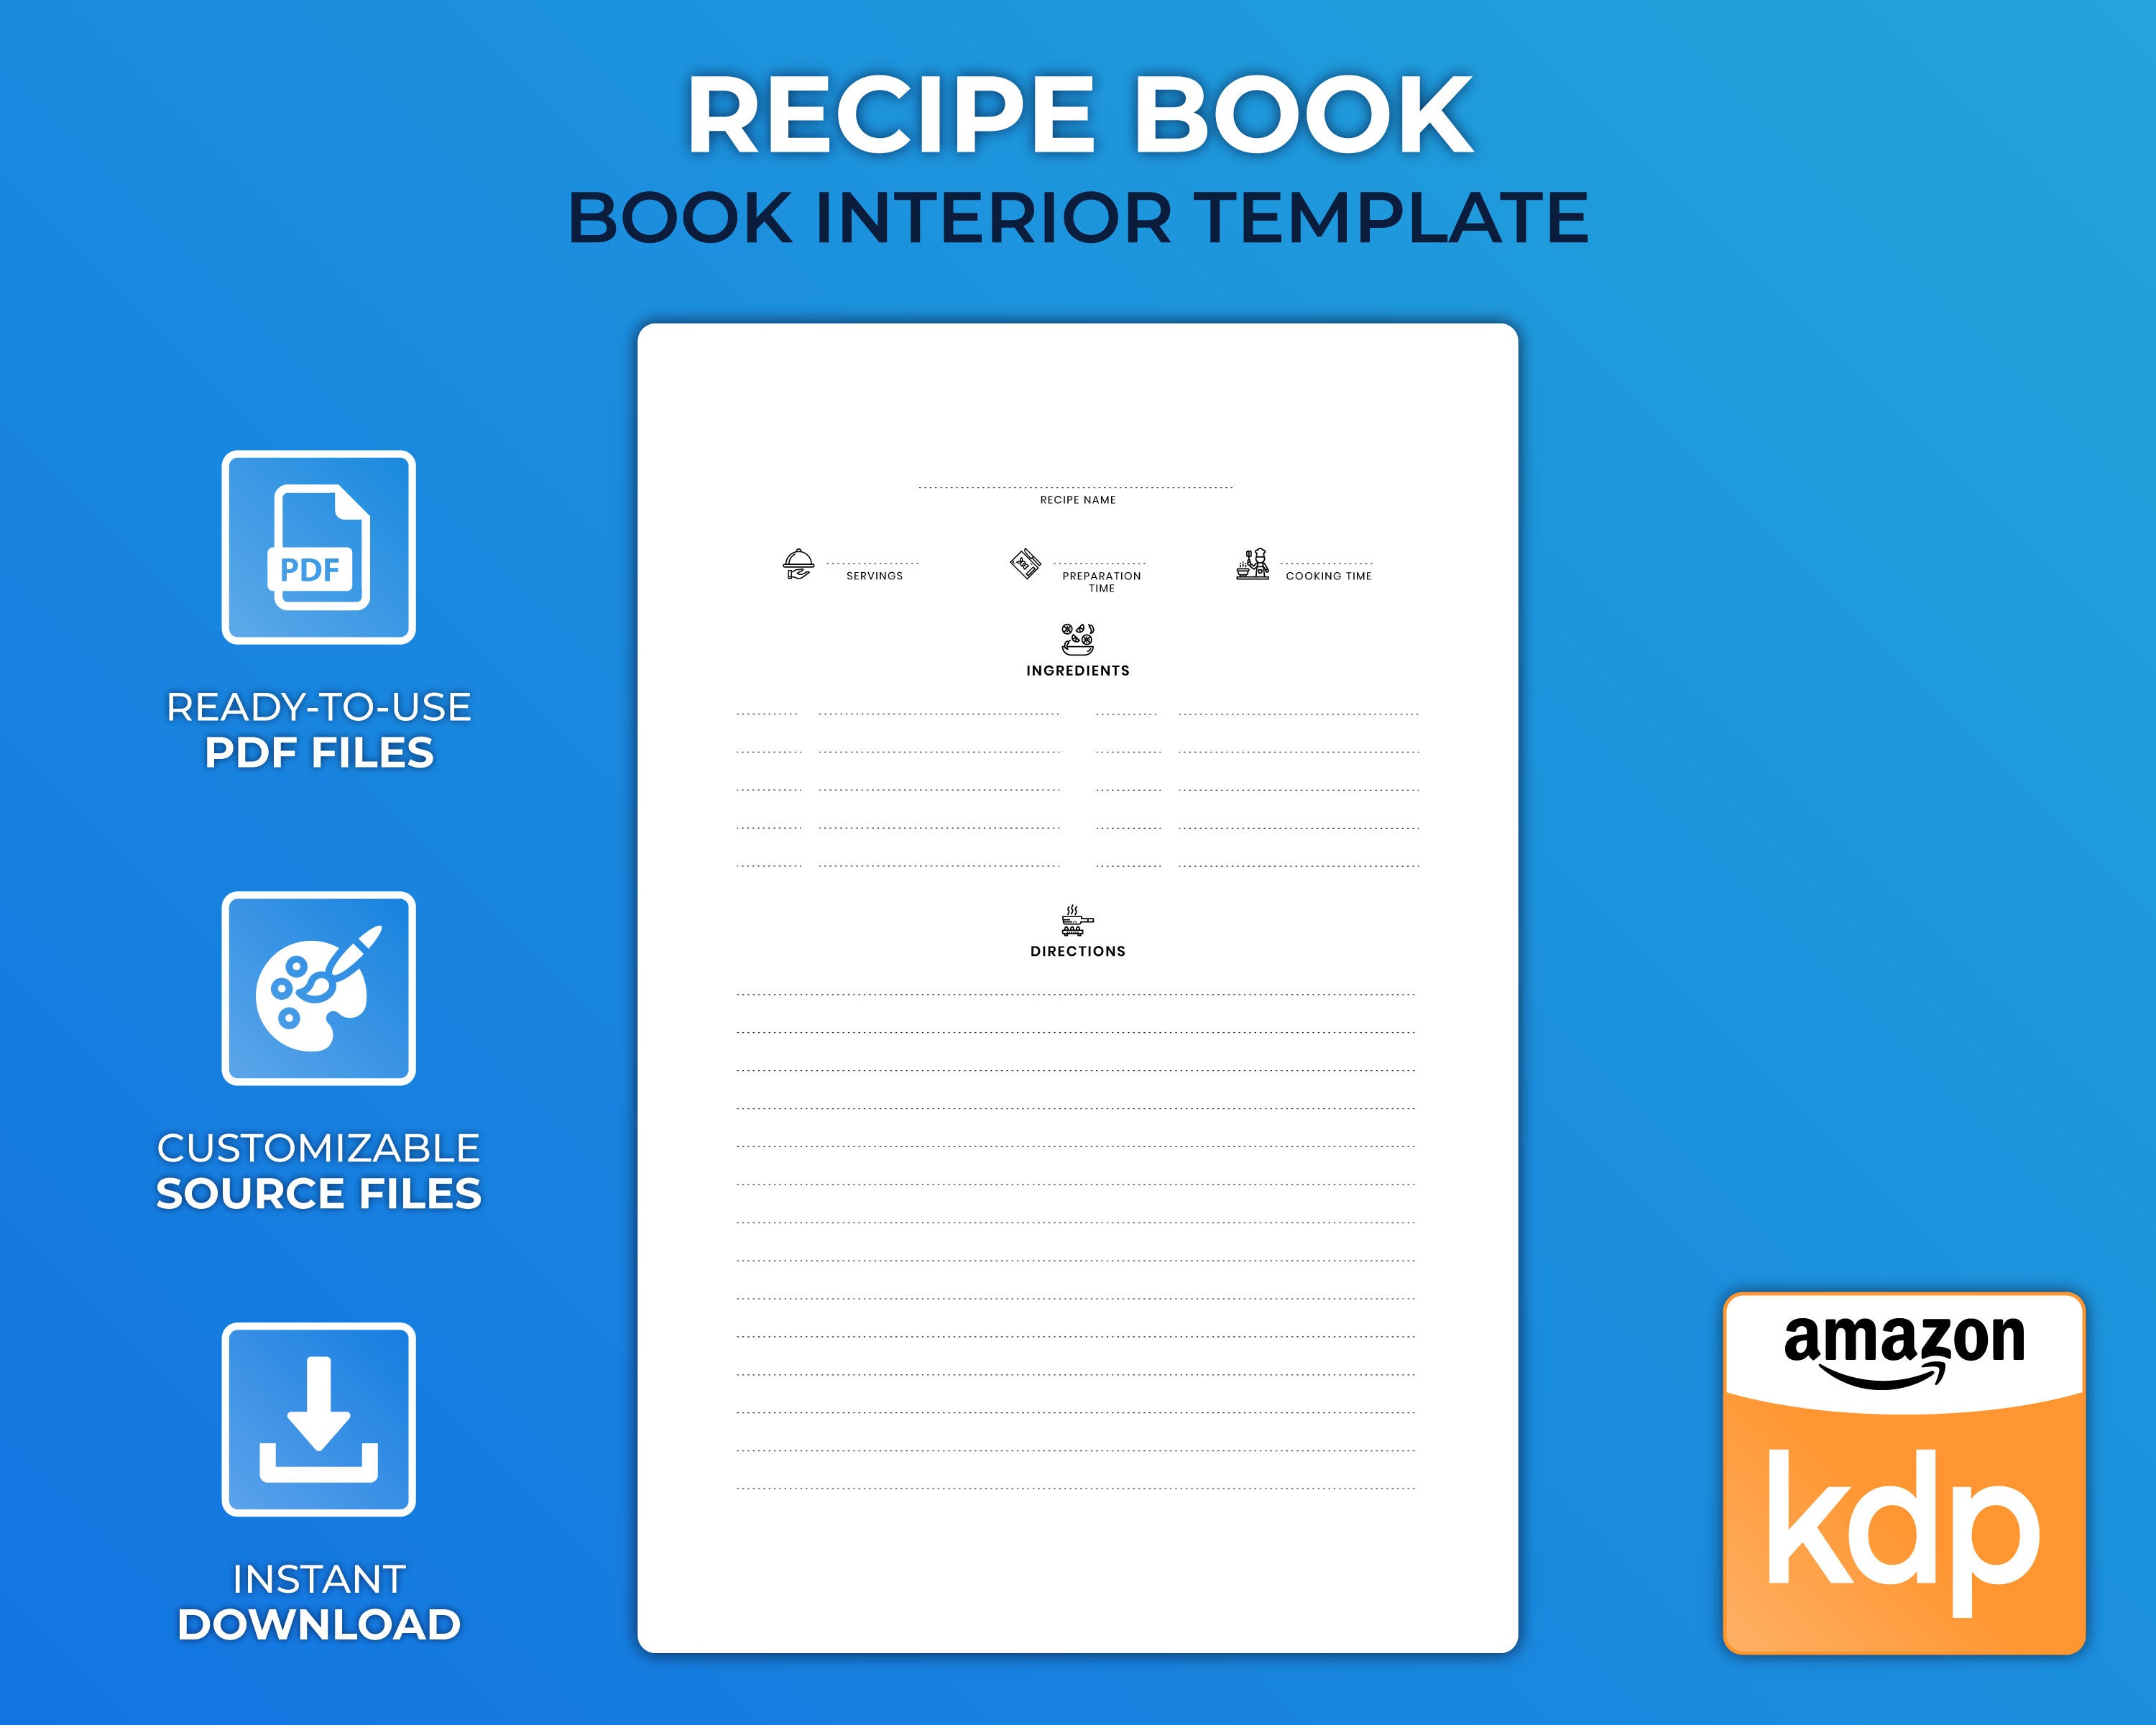 Blank Recipe Book / Cookbook  KDP Interior Template 8.5 X 11